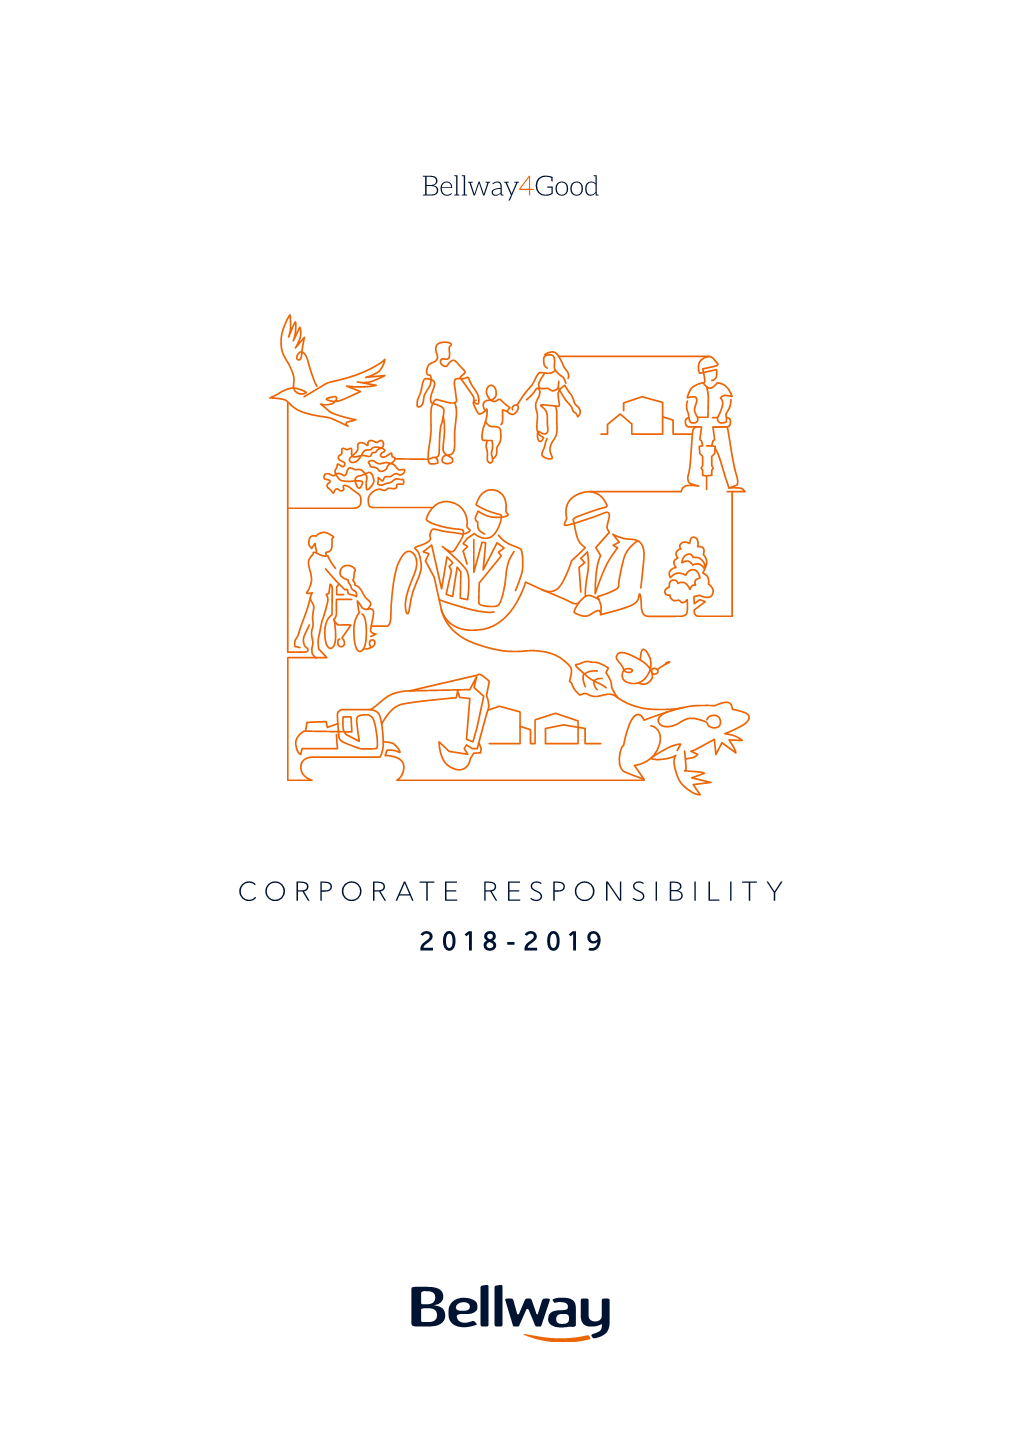 2019 Corporate Responsibility